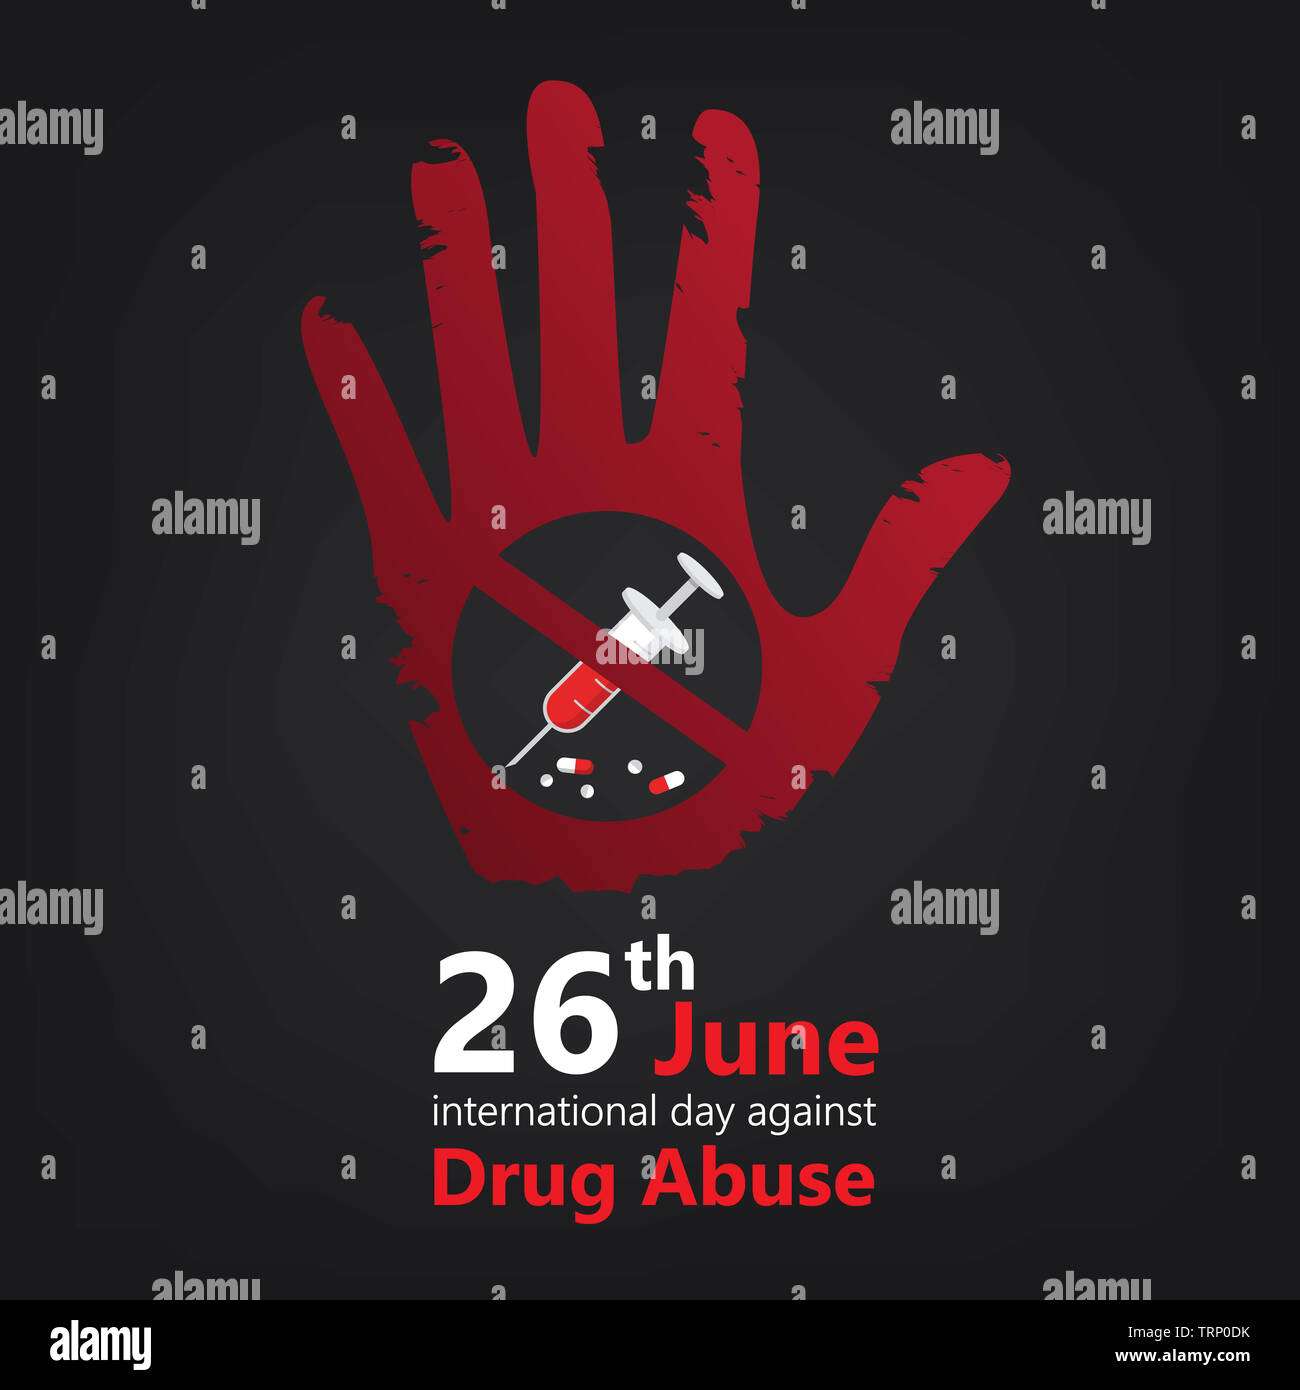 international day against drug abuse banner vector Stock Photo